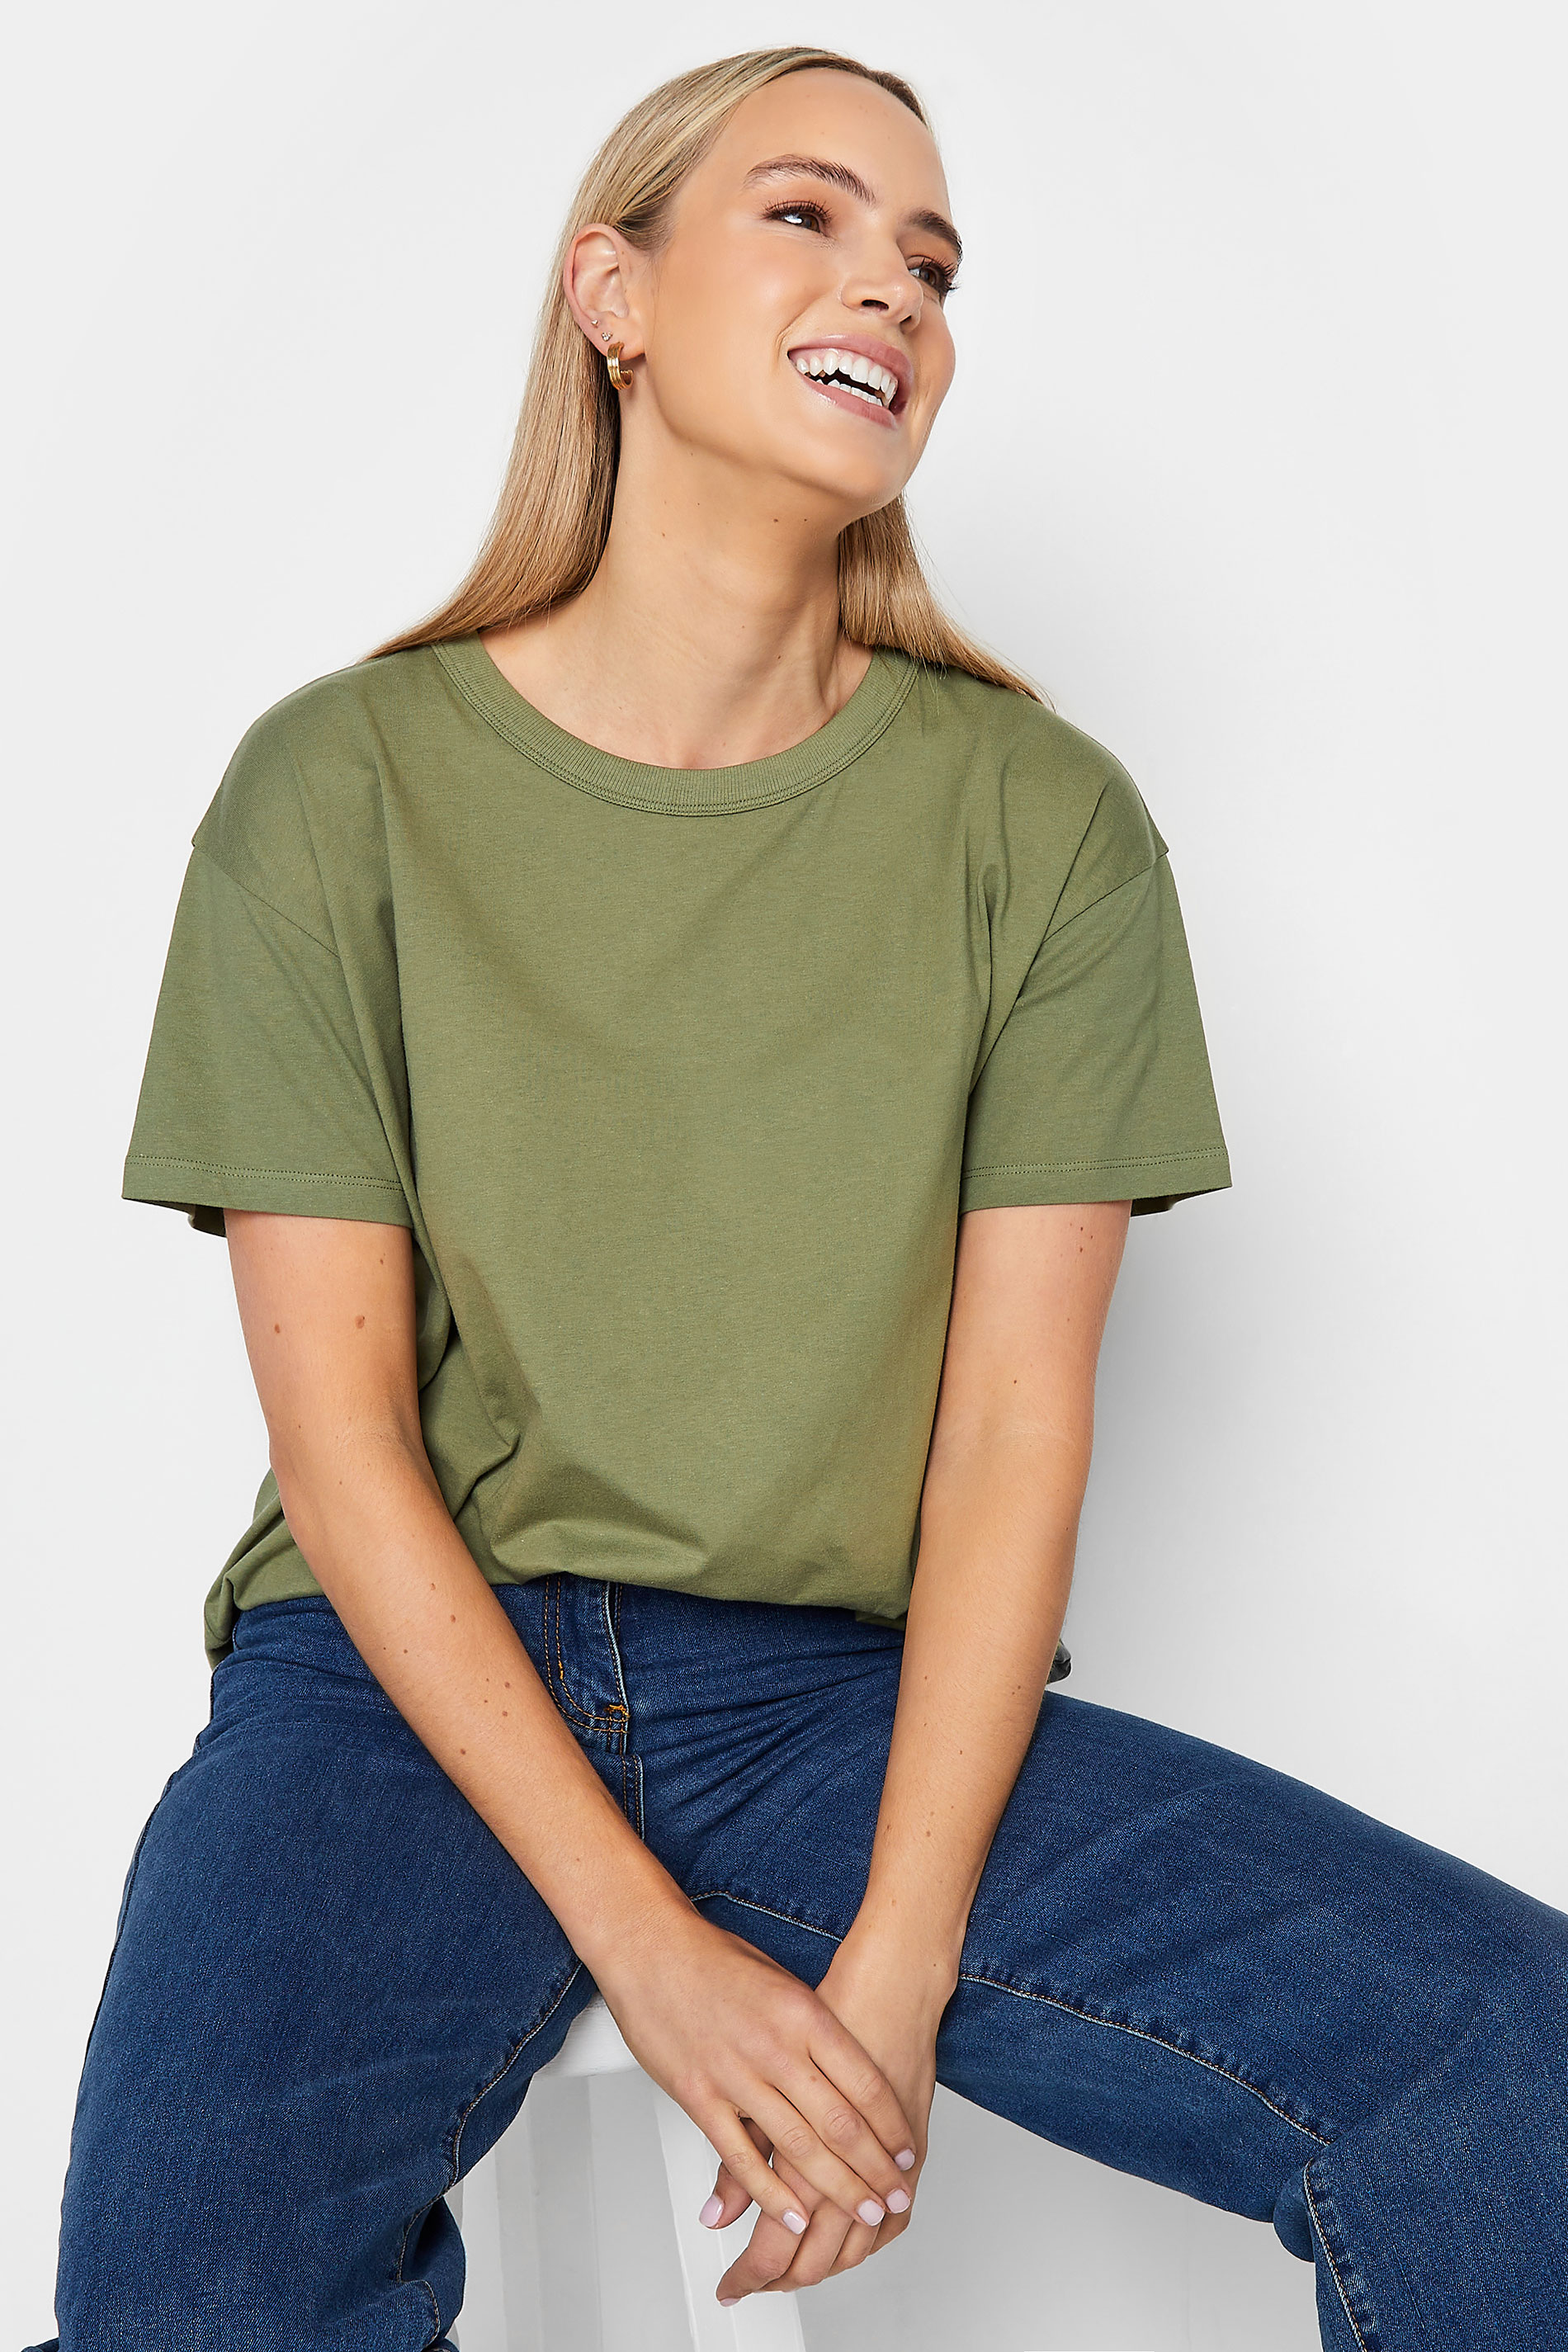 LTS Tall Khaki Green T-Shirt | Long Tall Sally 2